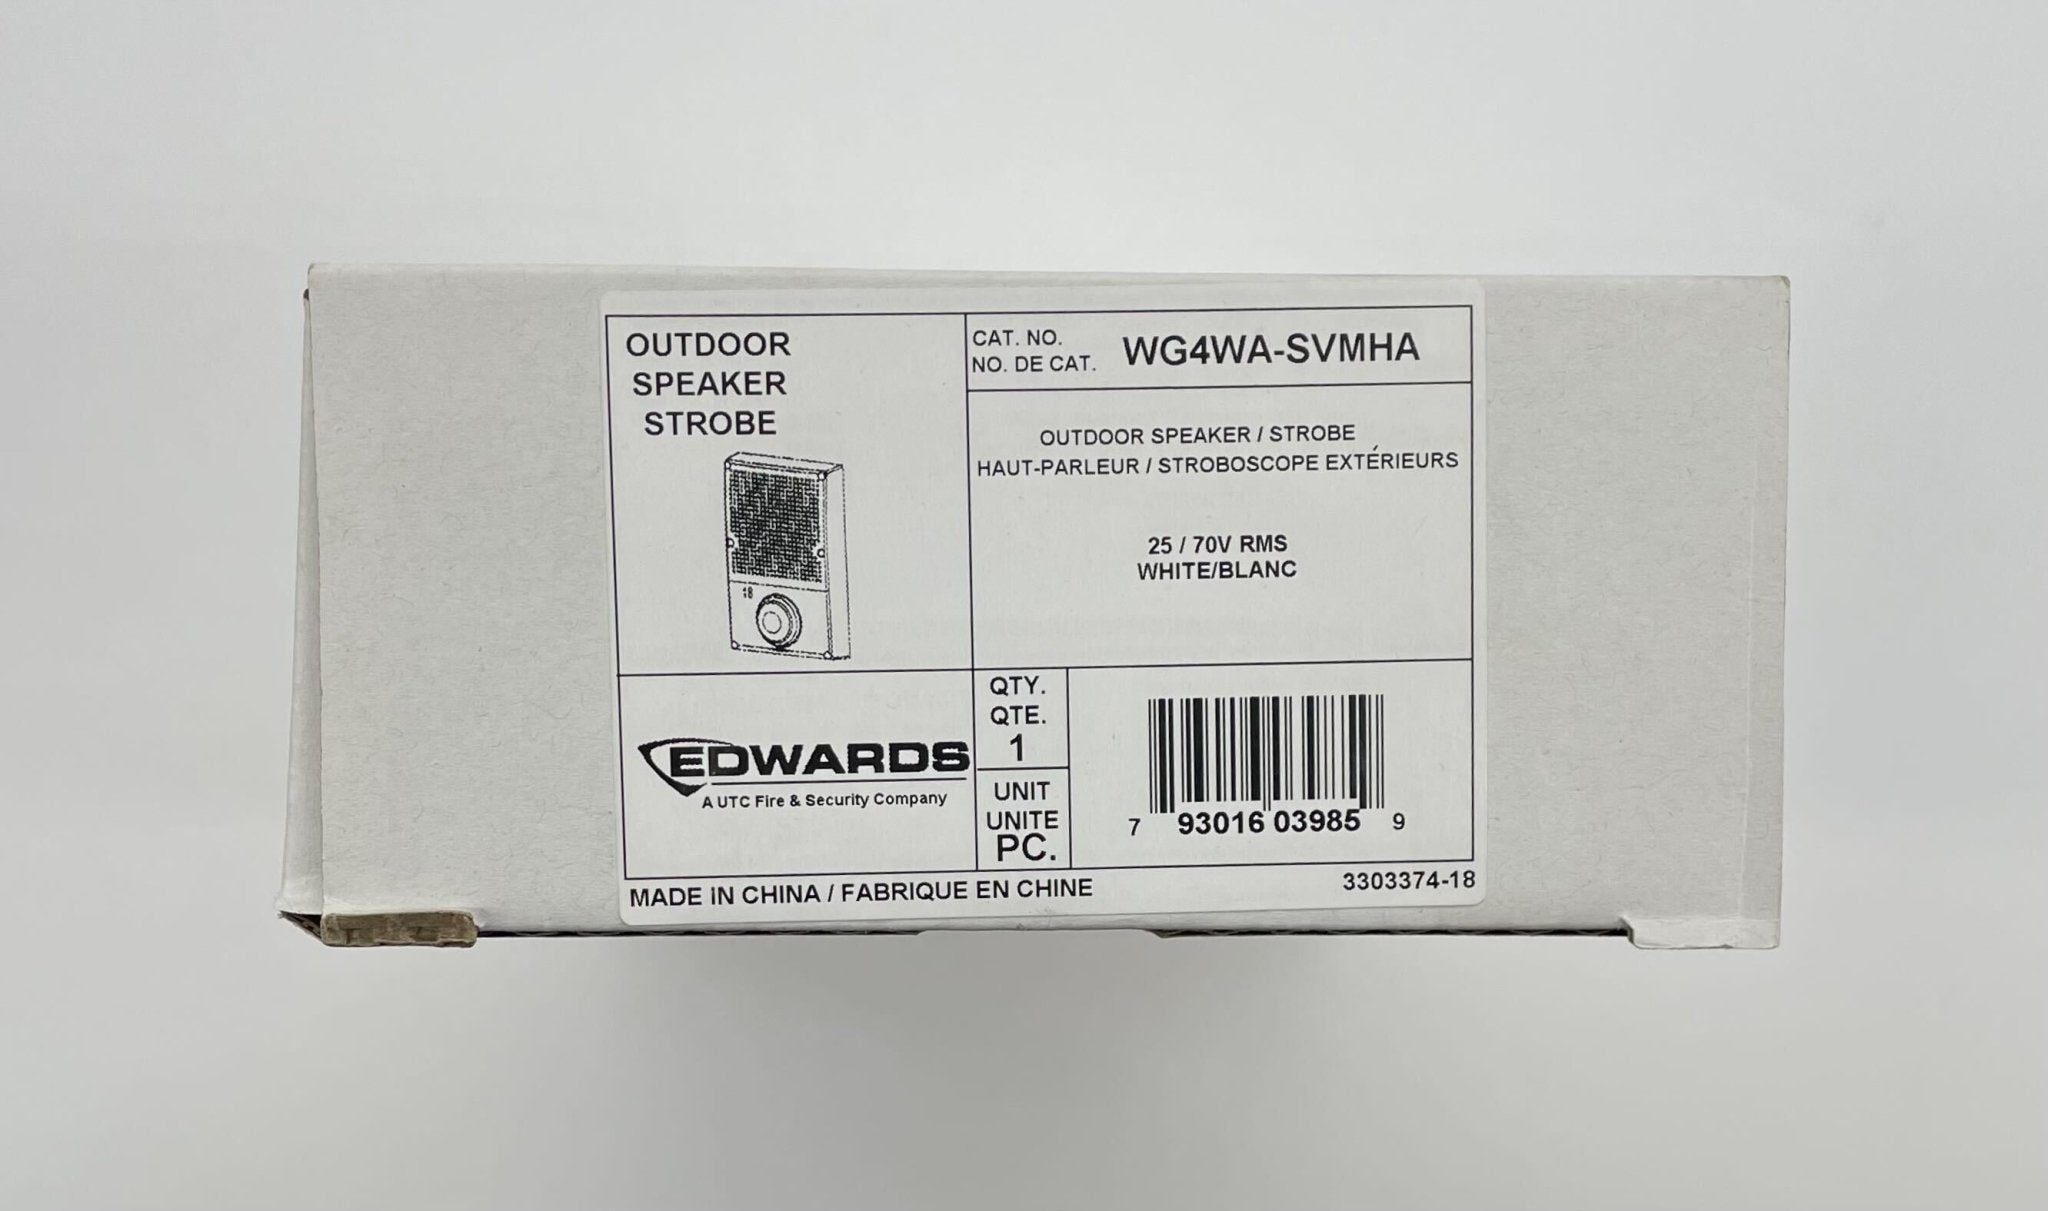 Edwards WG4WA-SVMHA - The Fire Alarm Supplier